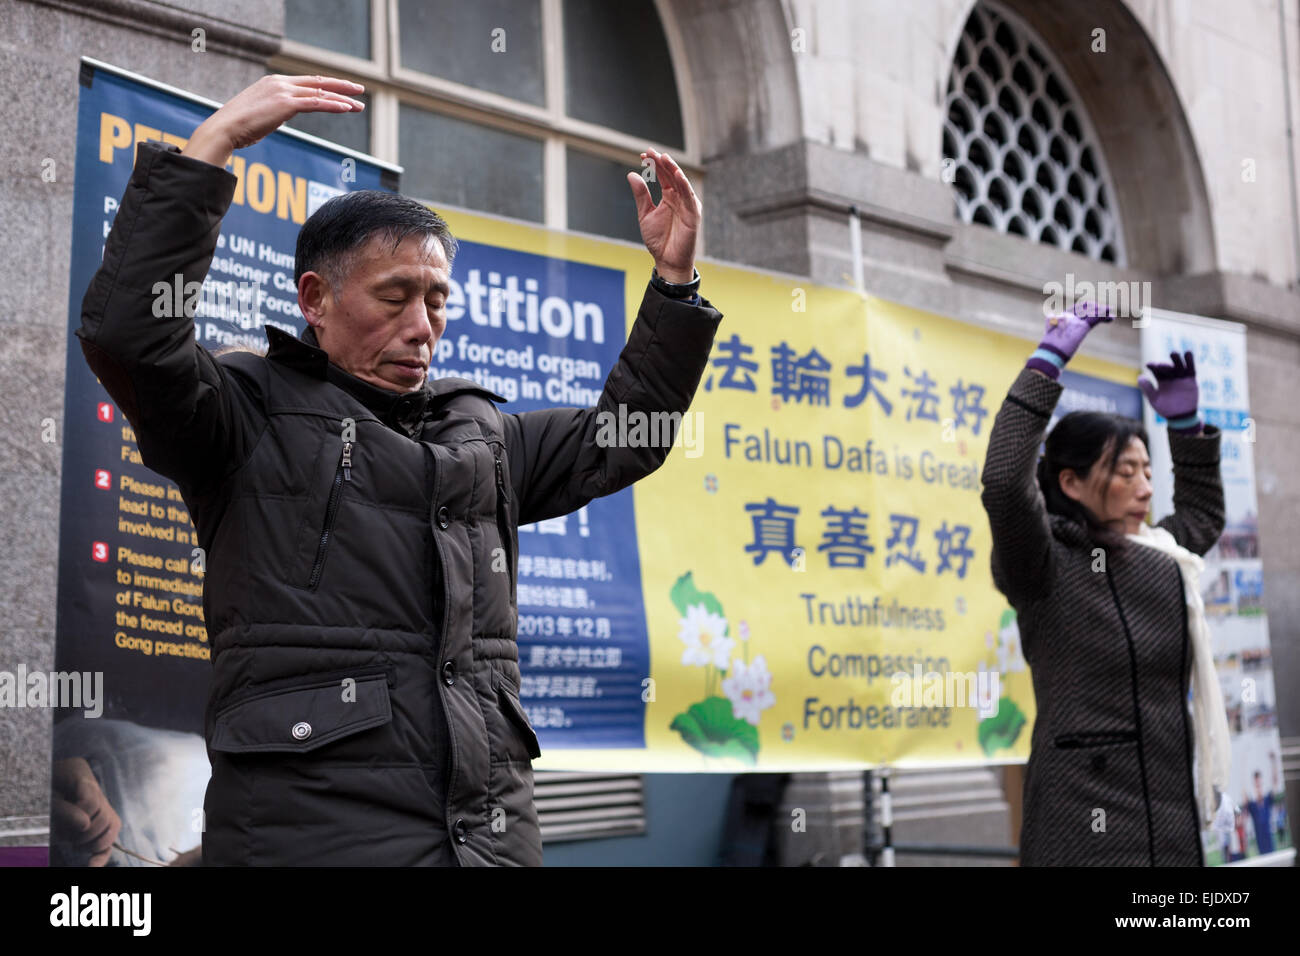 A man and woman practice Chinese spiritual discipline Falun Dafa (Falun Gong) in Chinatown in central London Stock Photo